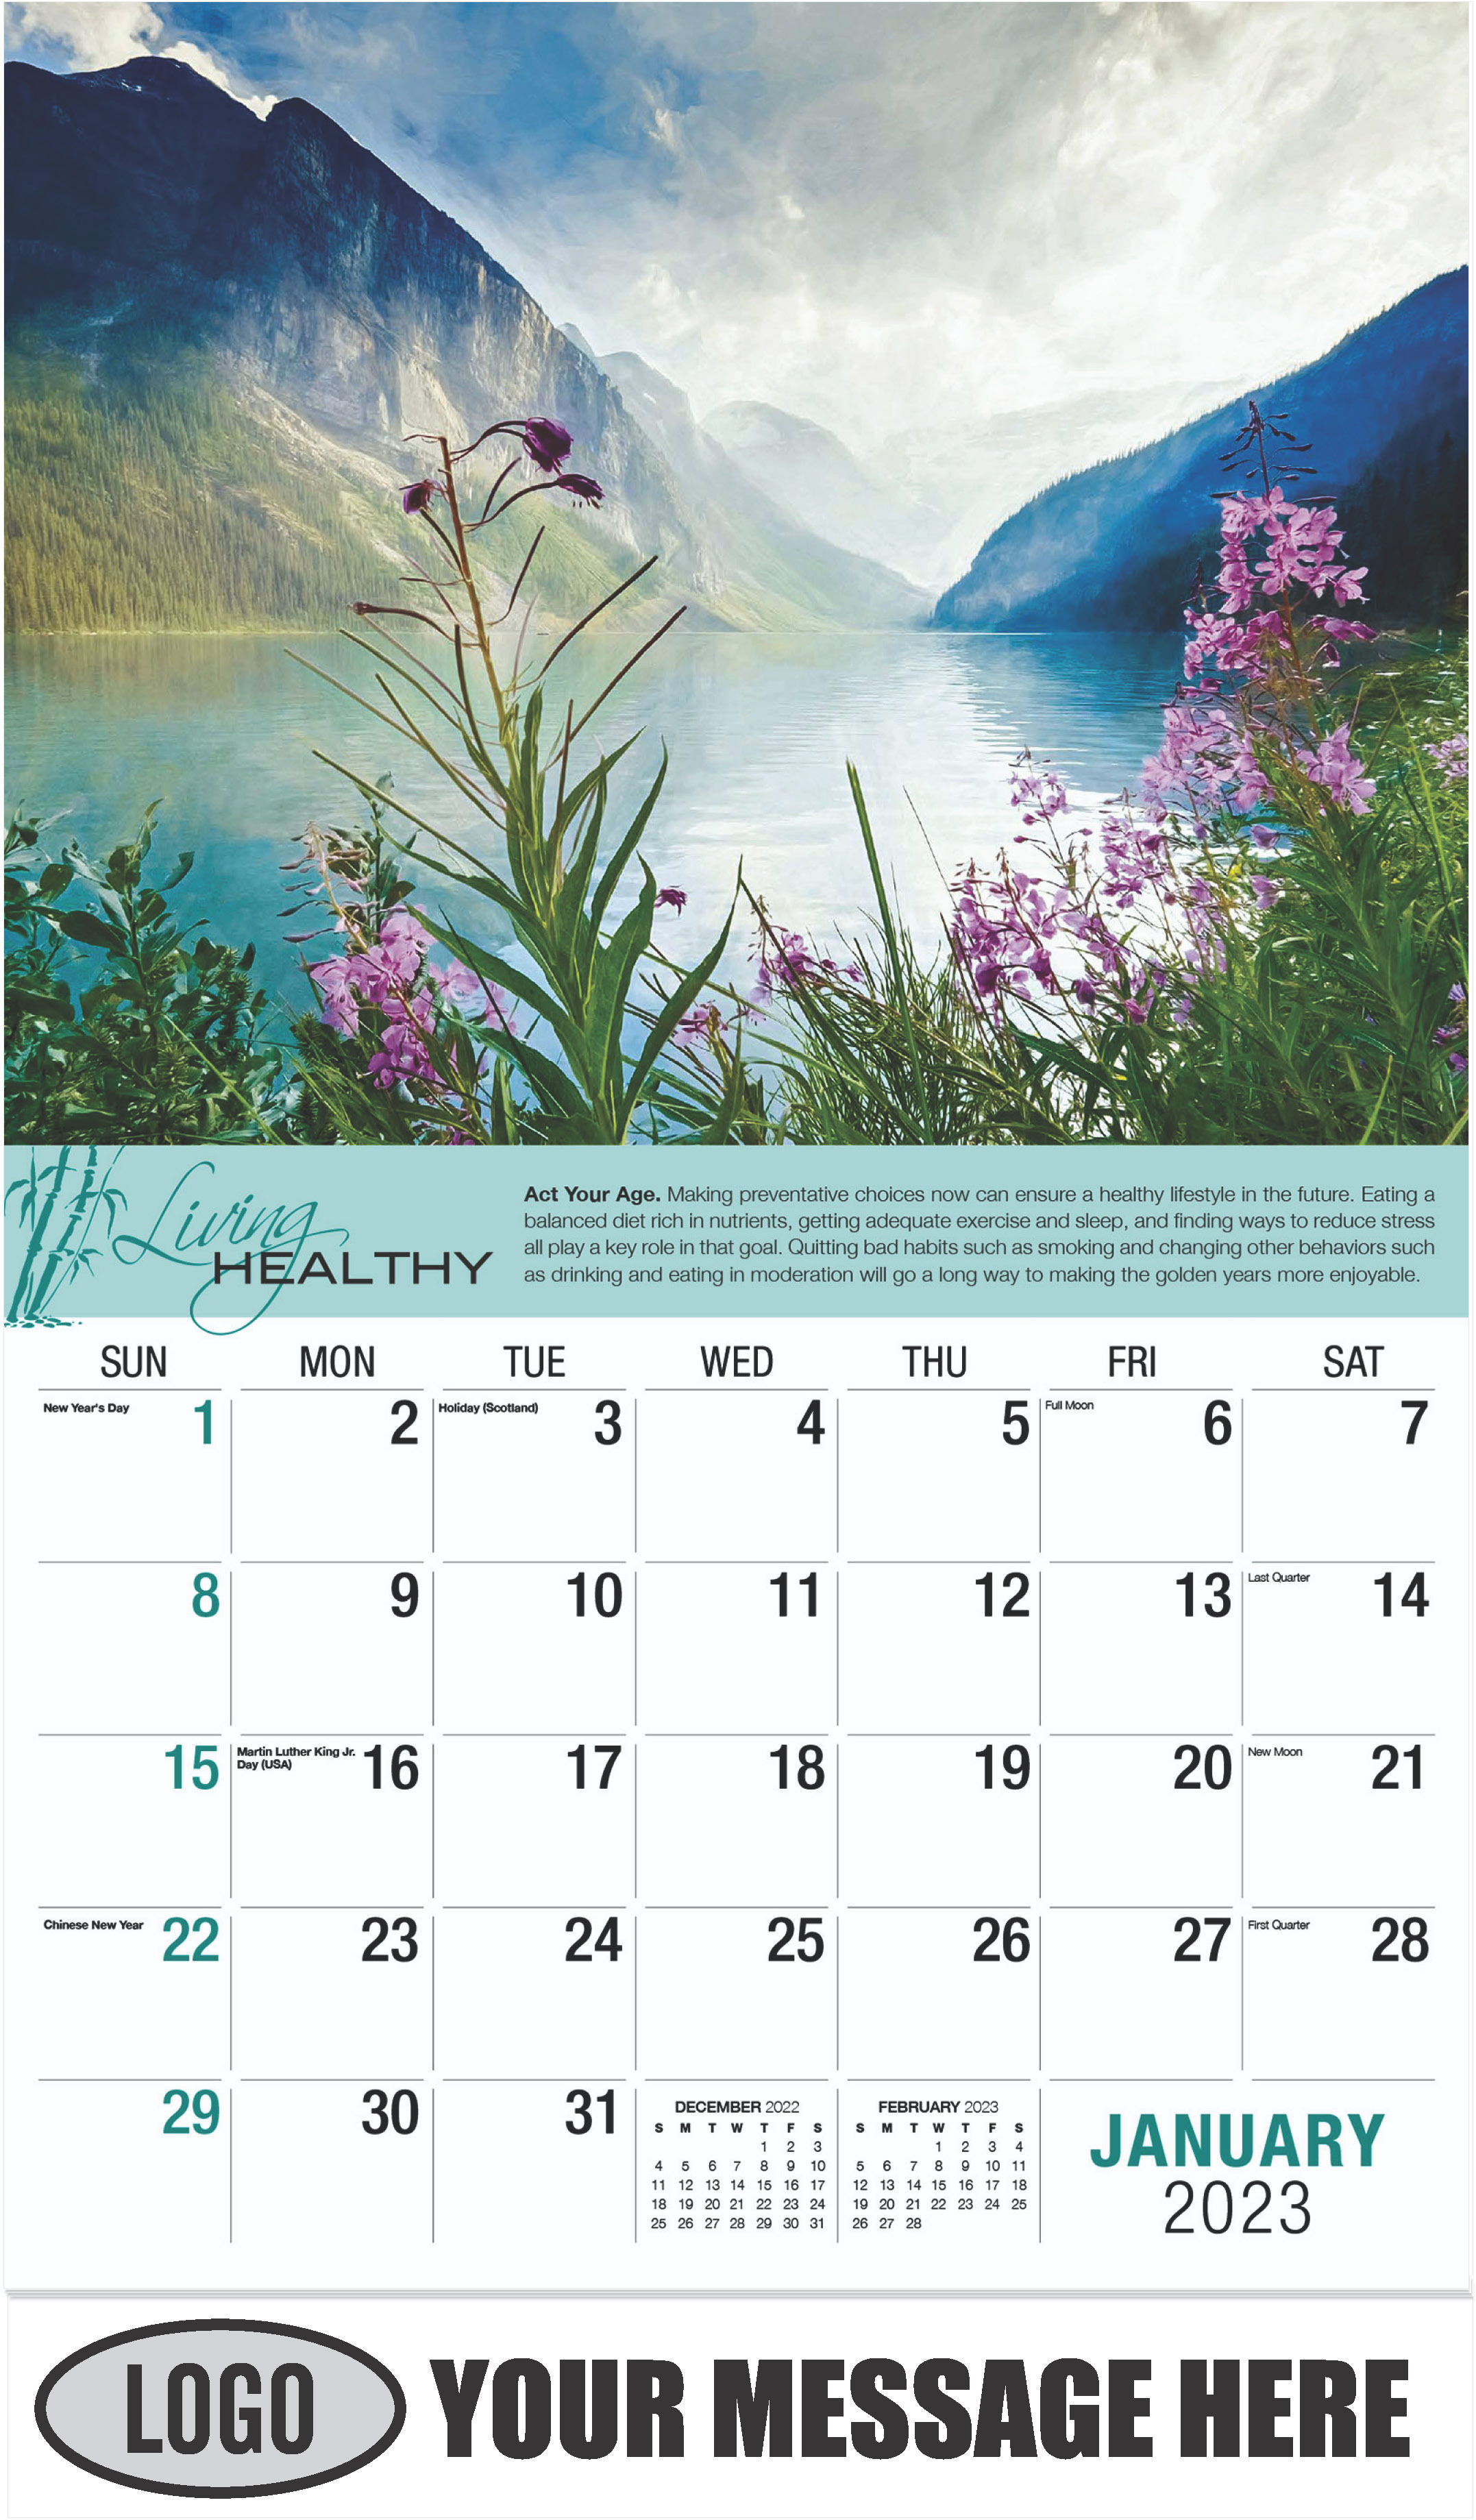 Lake Louise - January - Living Healthy 2023 Promotional Calendar